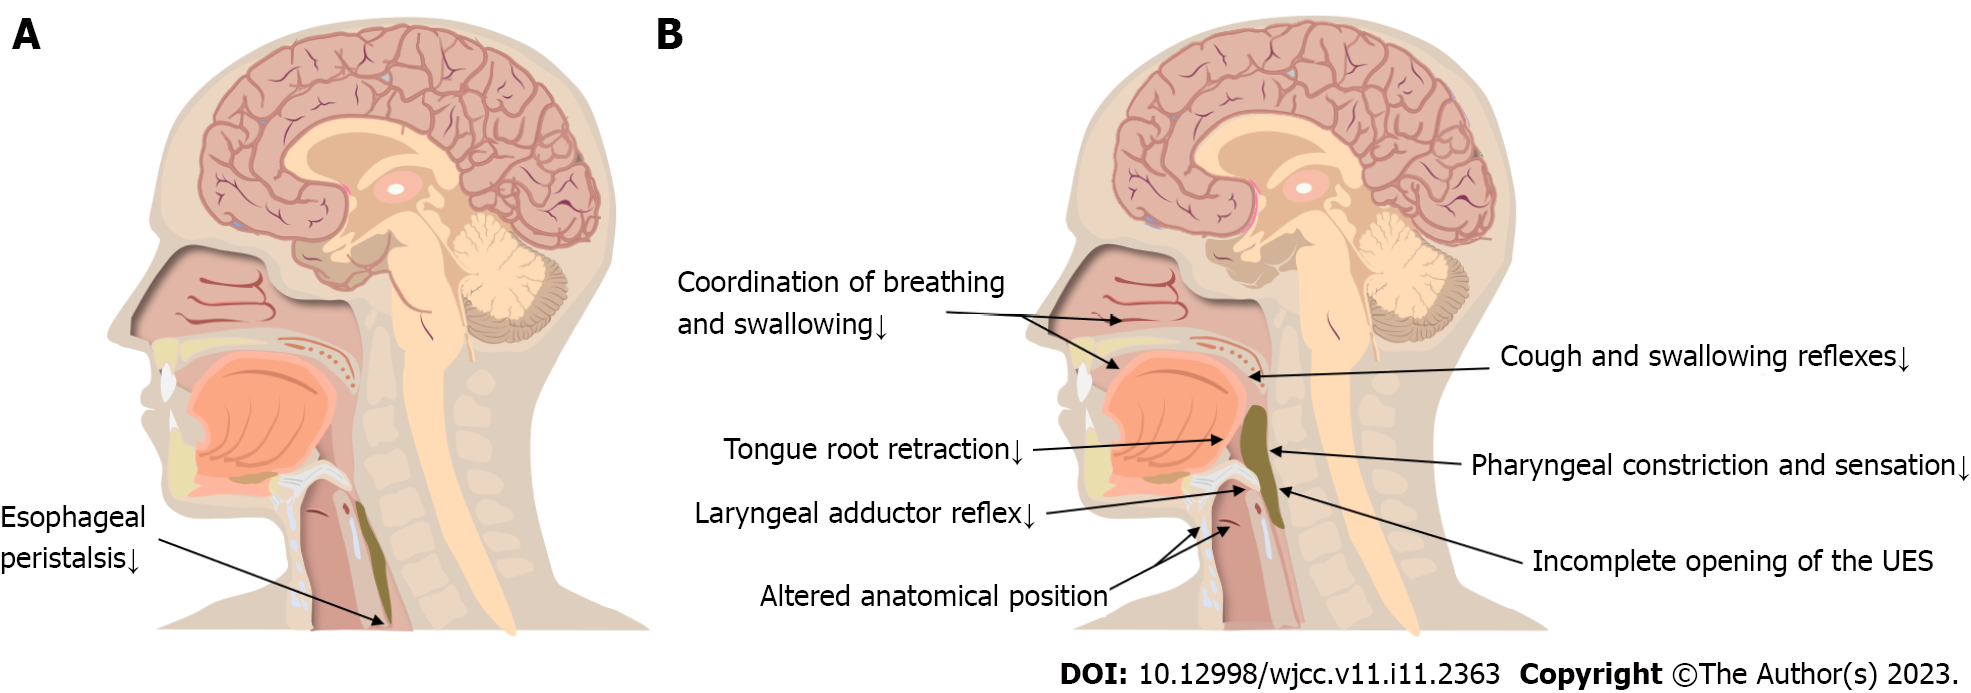 Normal Swallowing vs Aspiration - Trial Exhibits Inc.